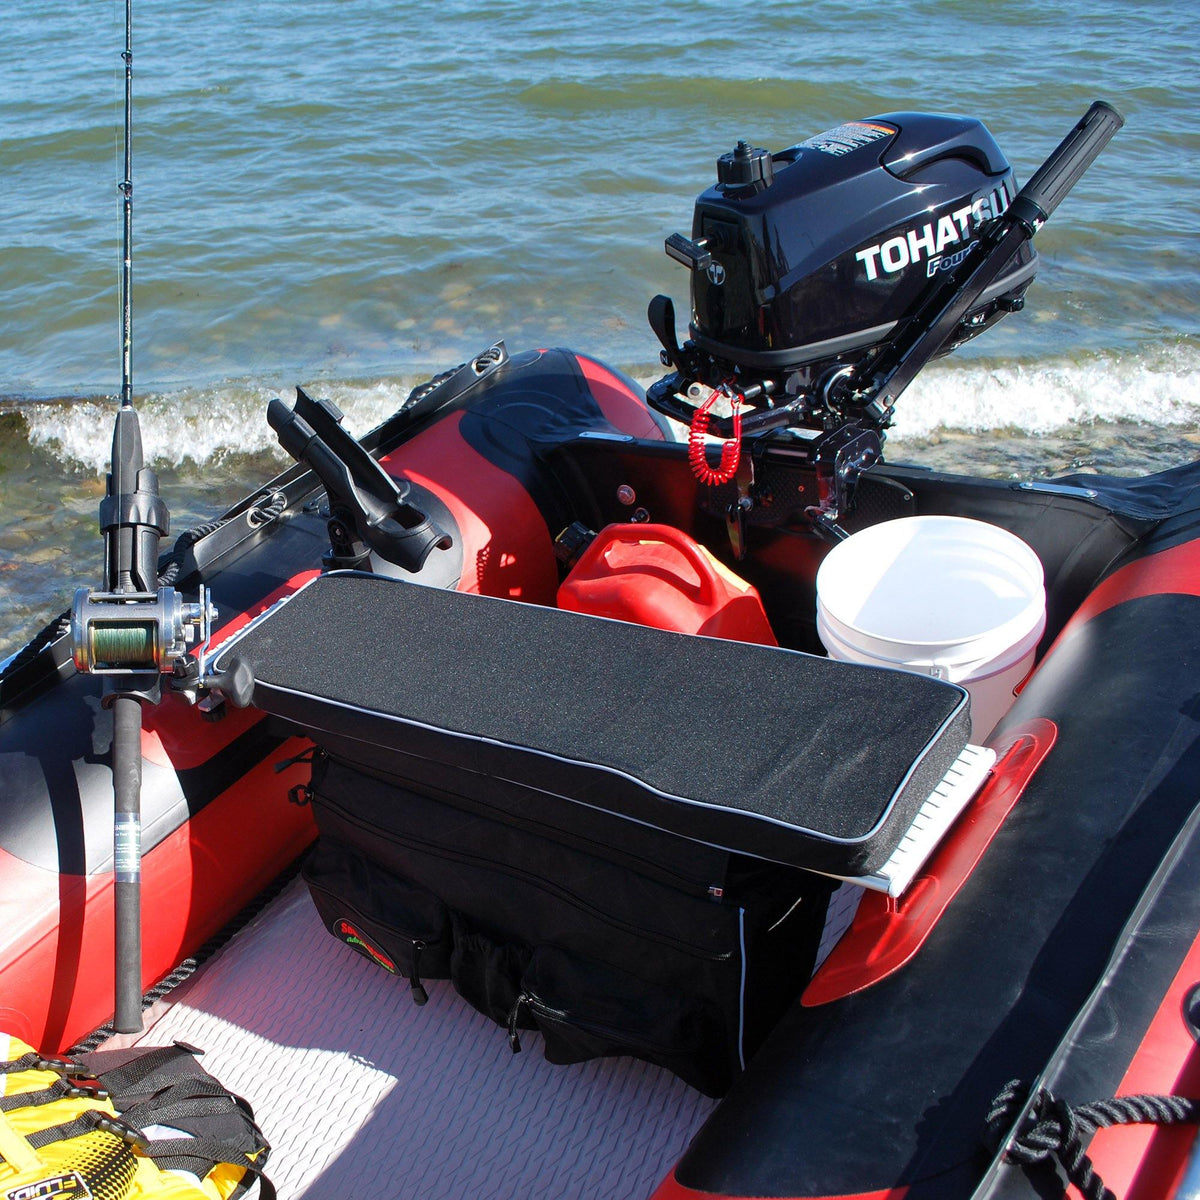 Seamax Sunlitec Inflatable Boat Bench